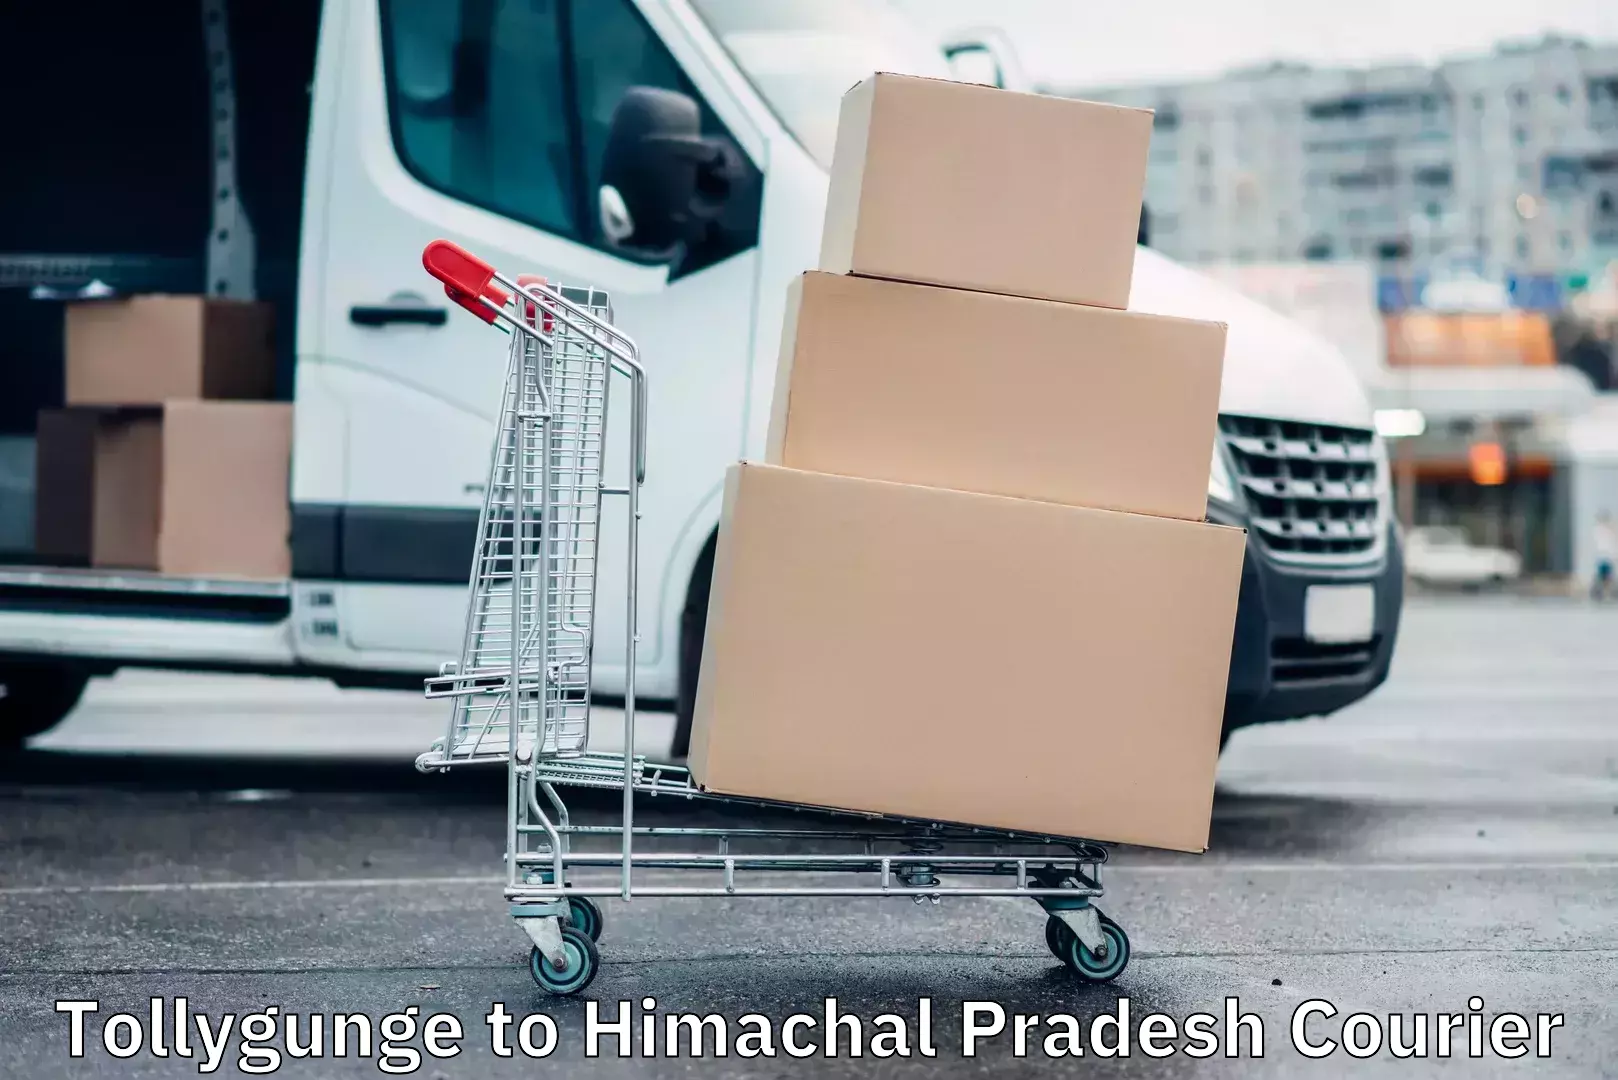 Quick dispatch service Tollygunge to Himachal Pradesh